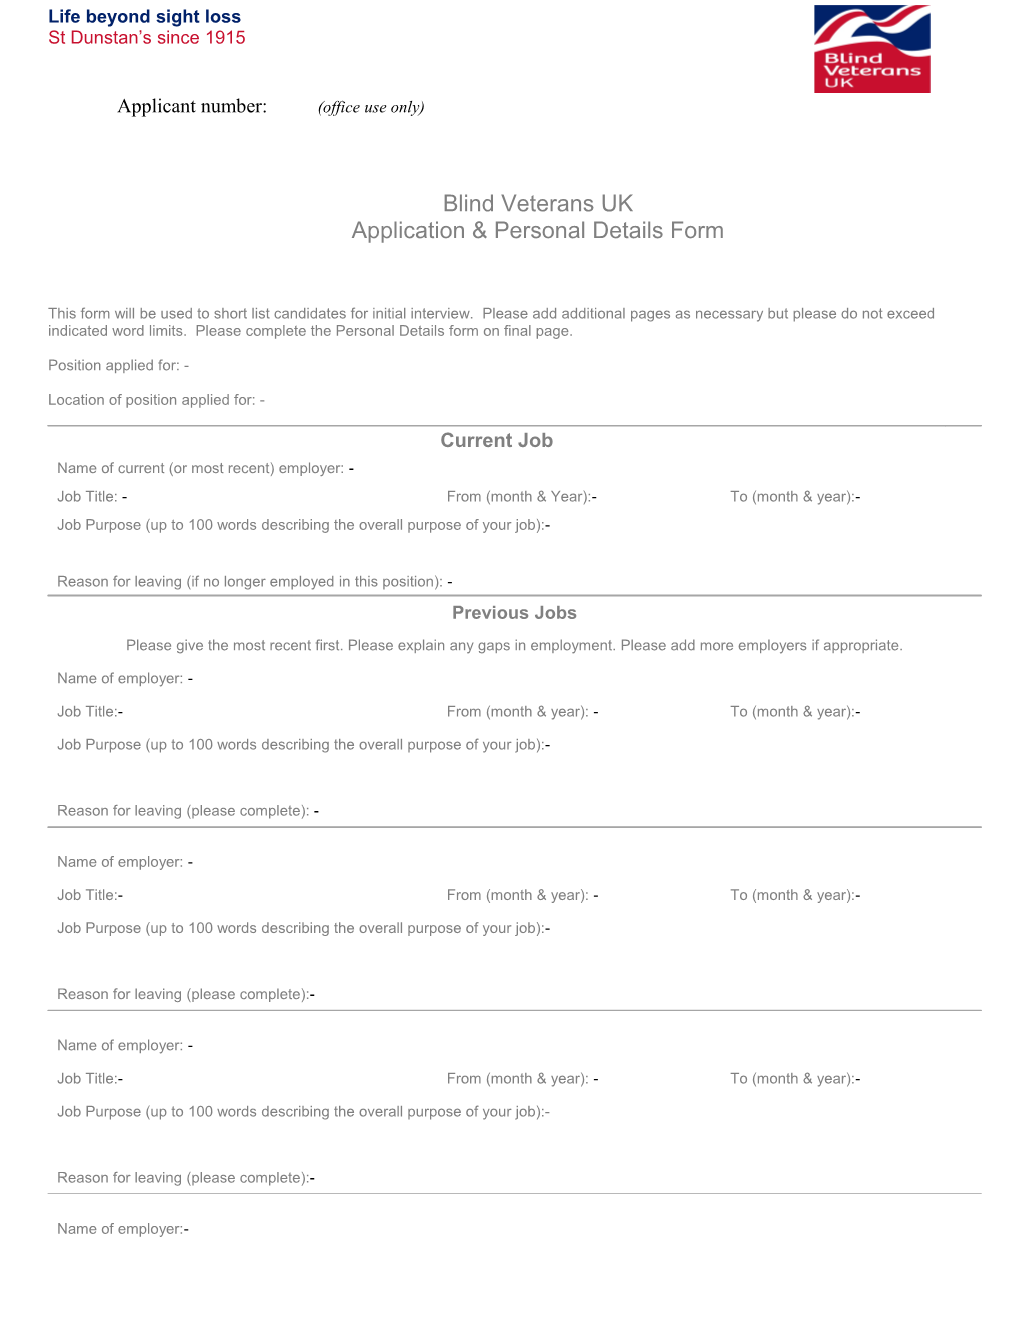 Application & Personal Details Form